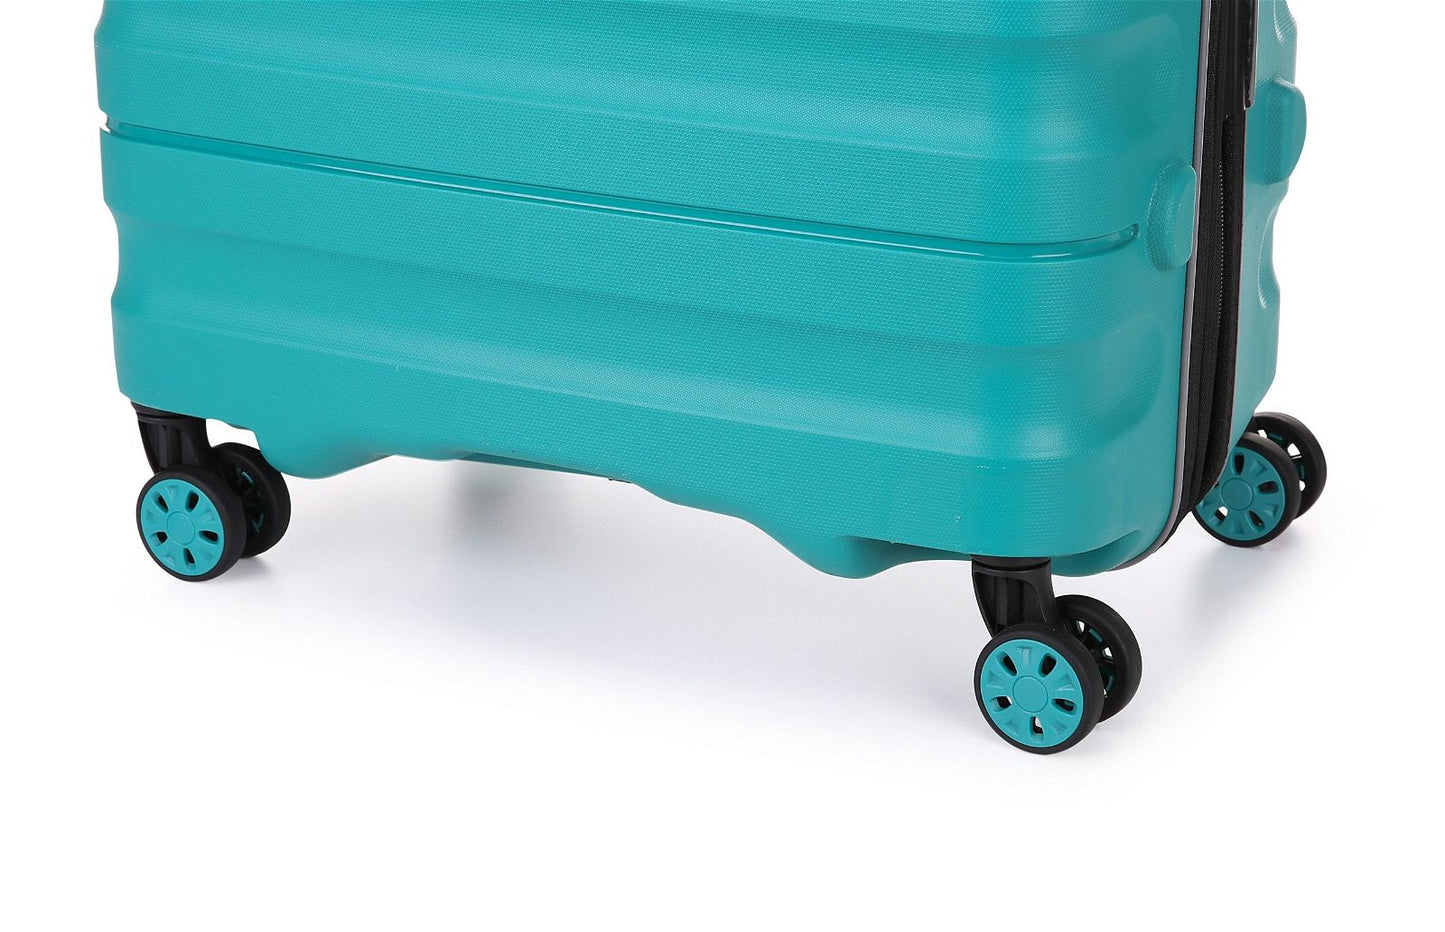 Antler - Lincoln Medium 68cm Hardside 4 Wheel Suitcase - Teal - rainbowbags